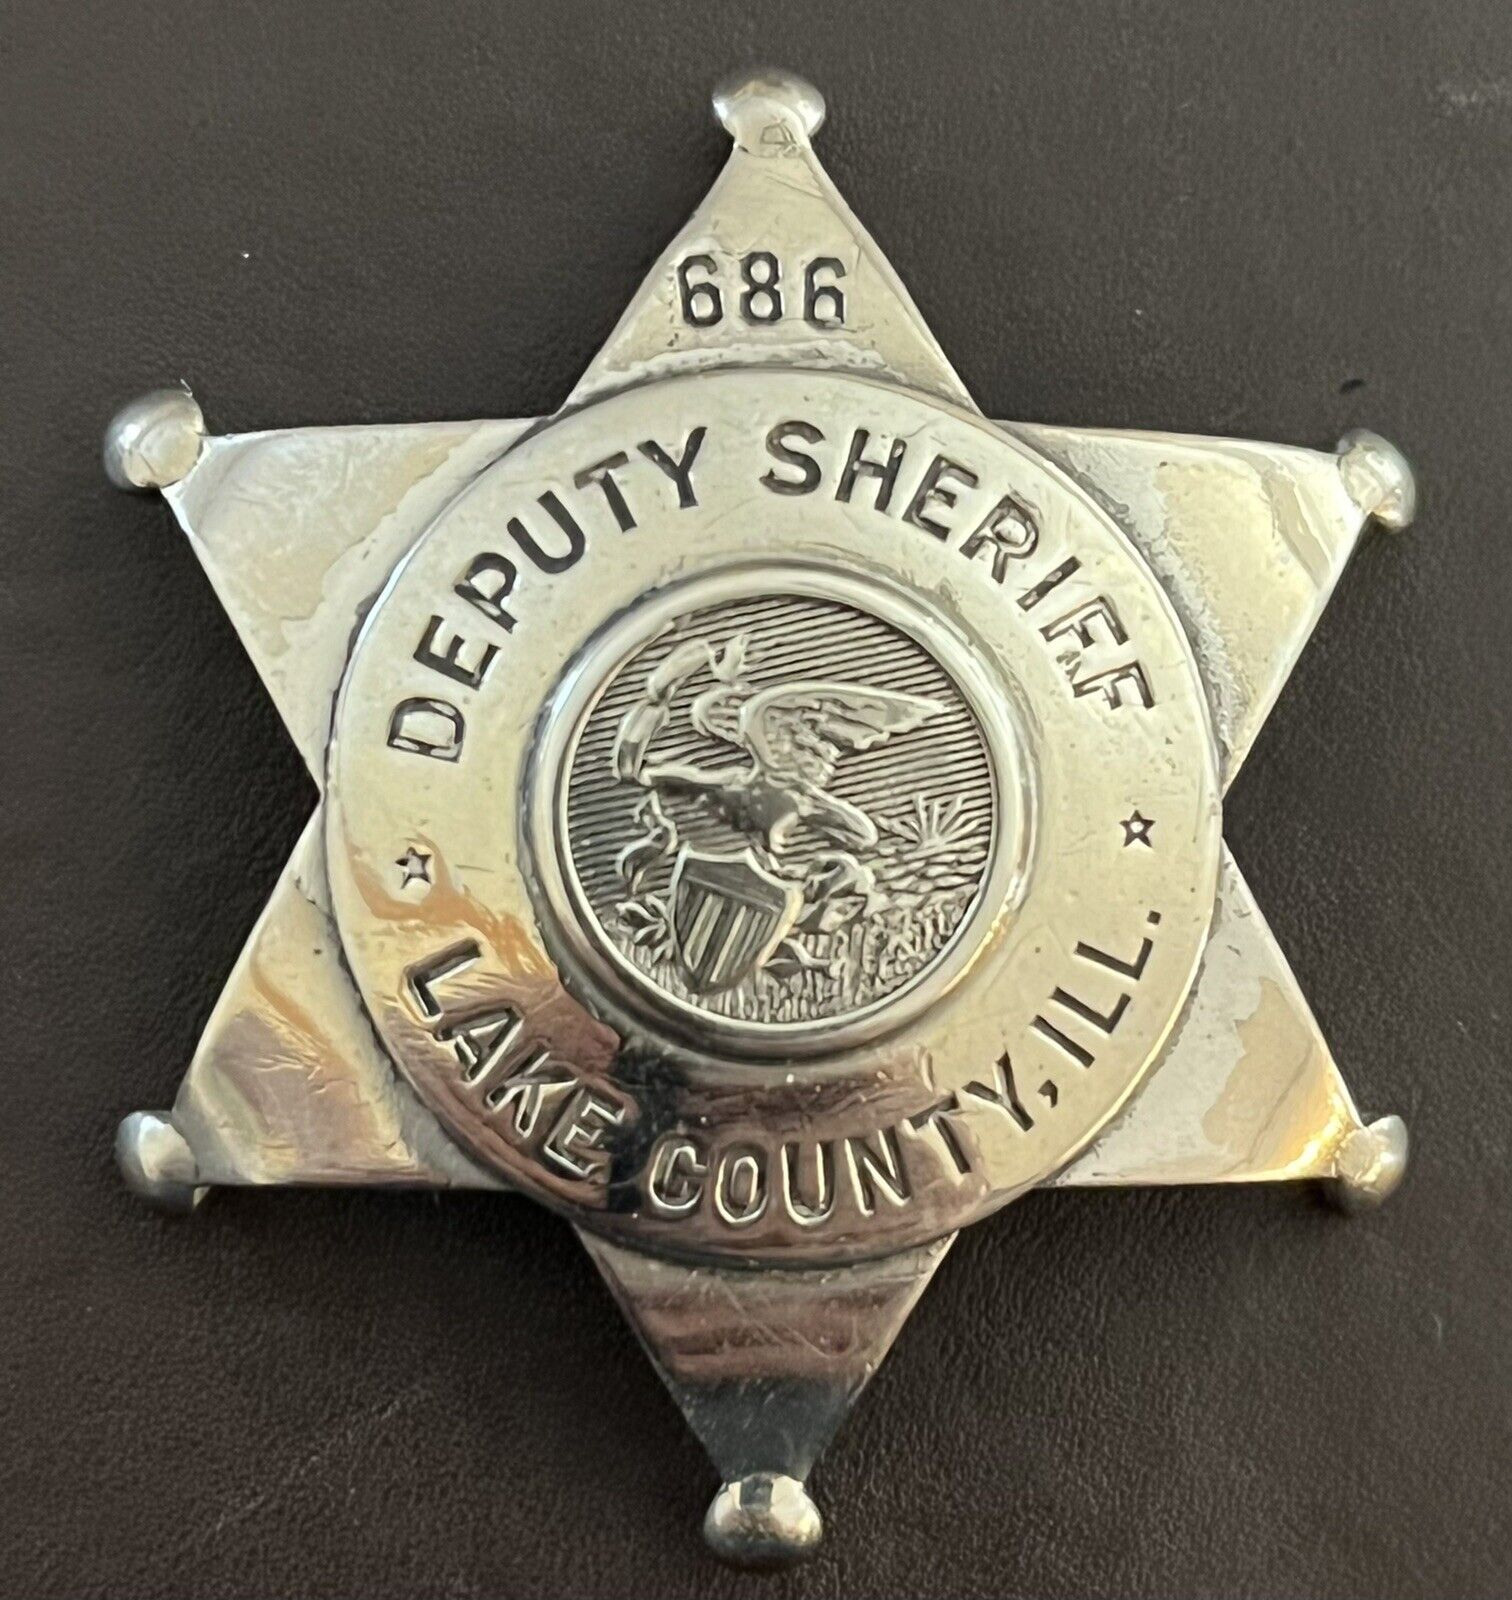 Vintage Obsolete Deputy Sheriff Badge Lake County, Illinois # 686 Obsolete